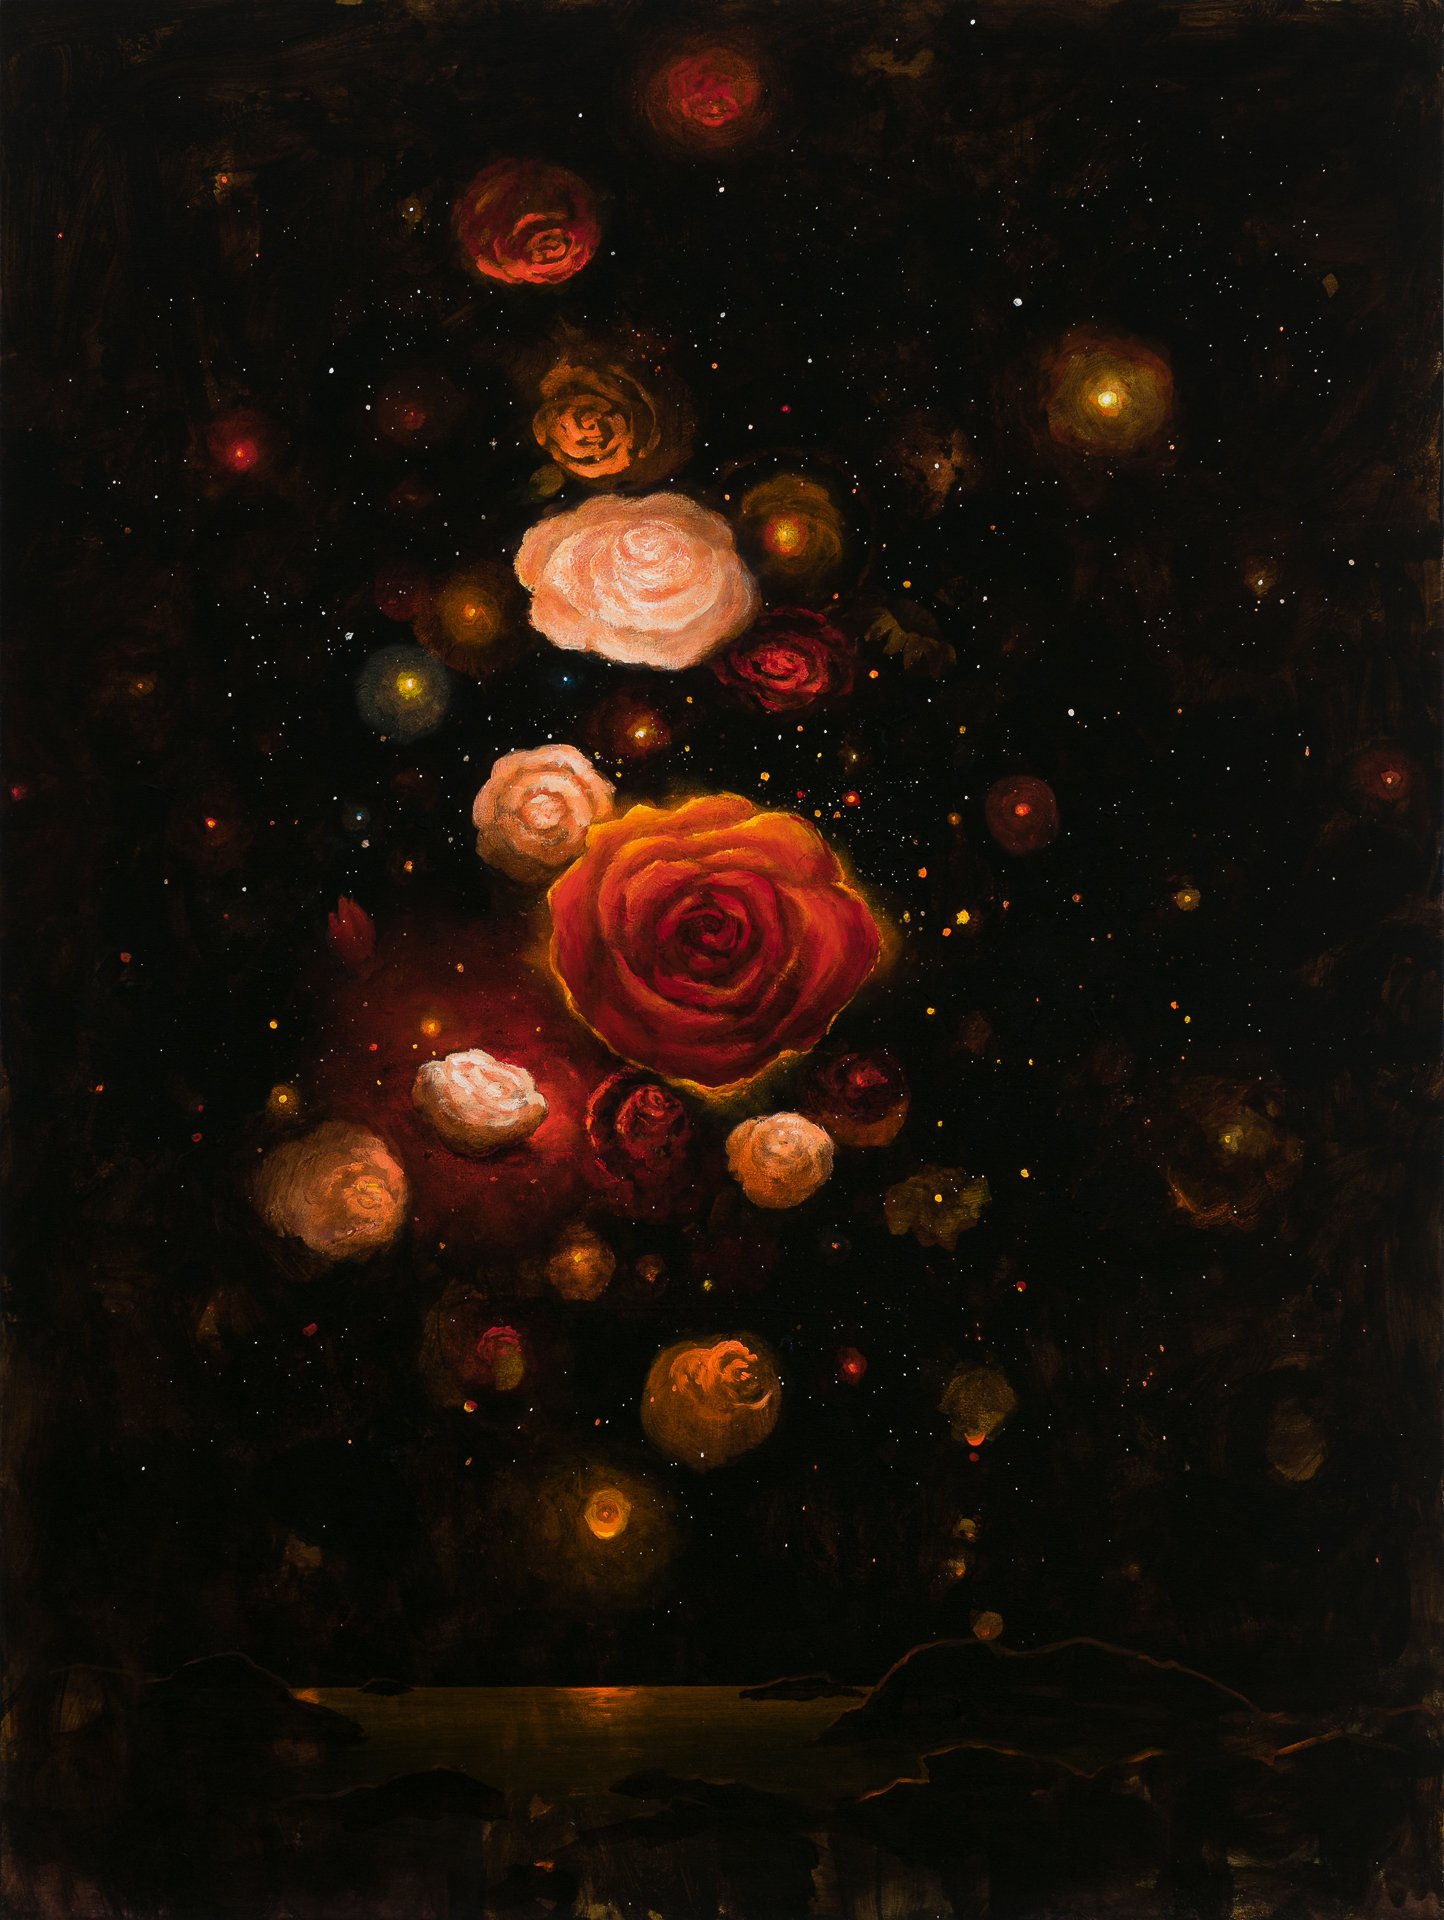 Constellation Rosa, 48"x36", acrylic on canvas